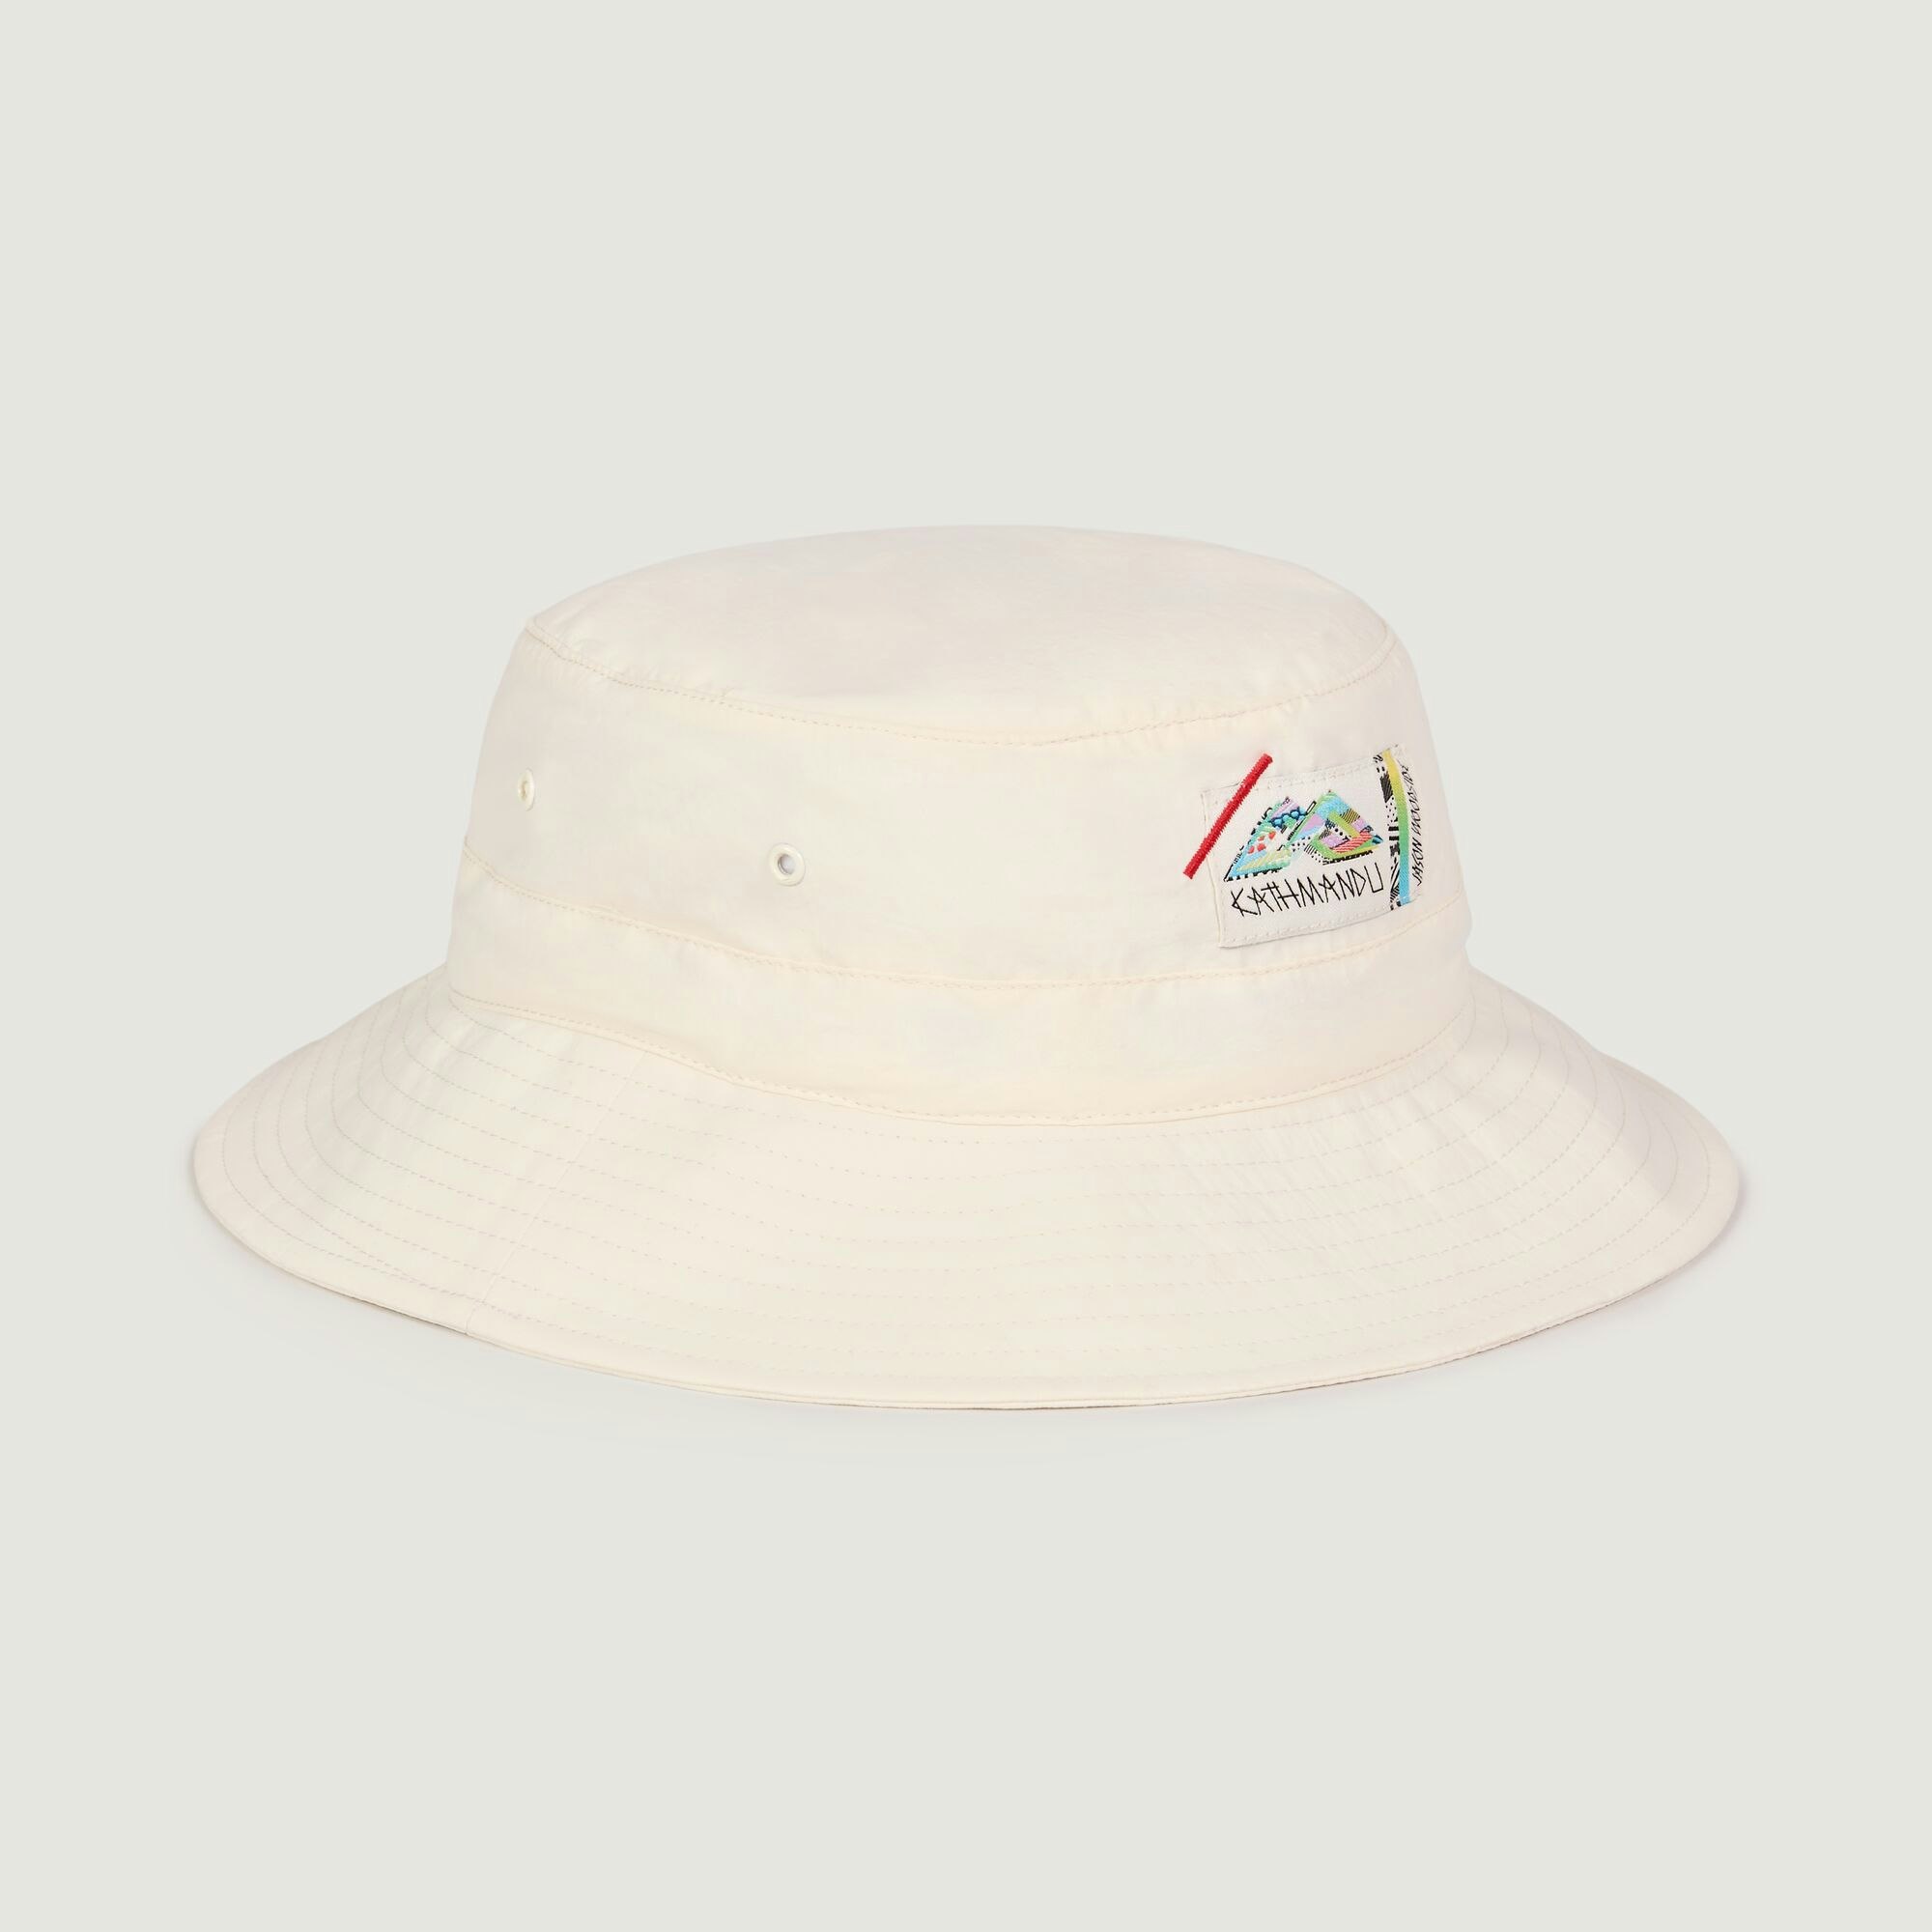 Kathmandu Jason Woodside EVRY-Day Upf 50+ Bucket Hat - Hat Natural S/M